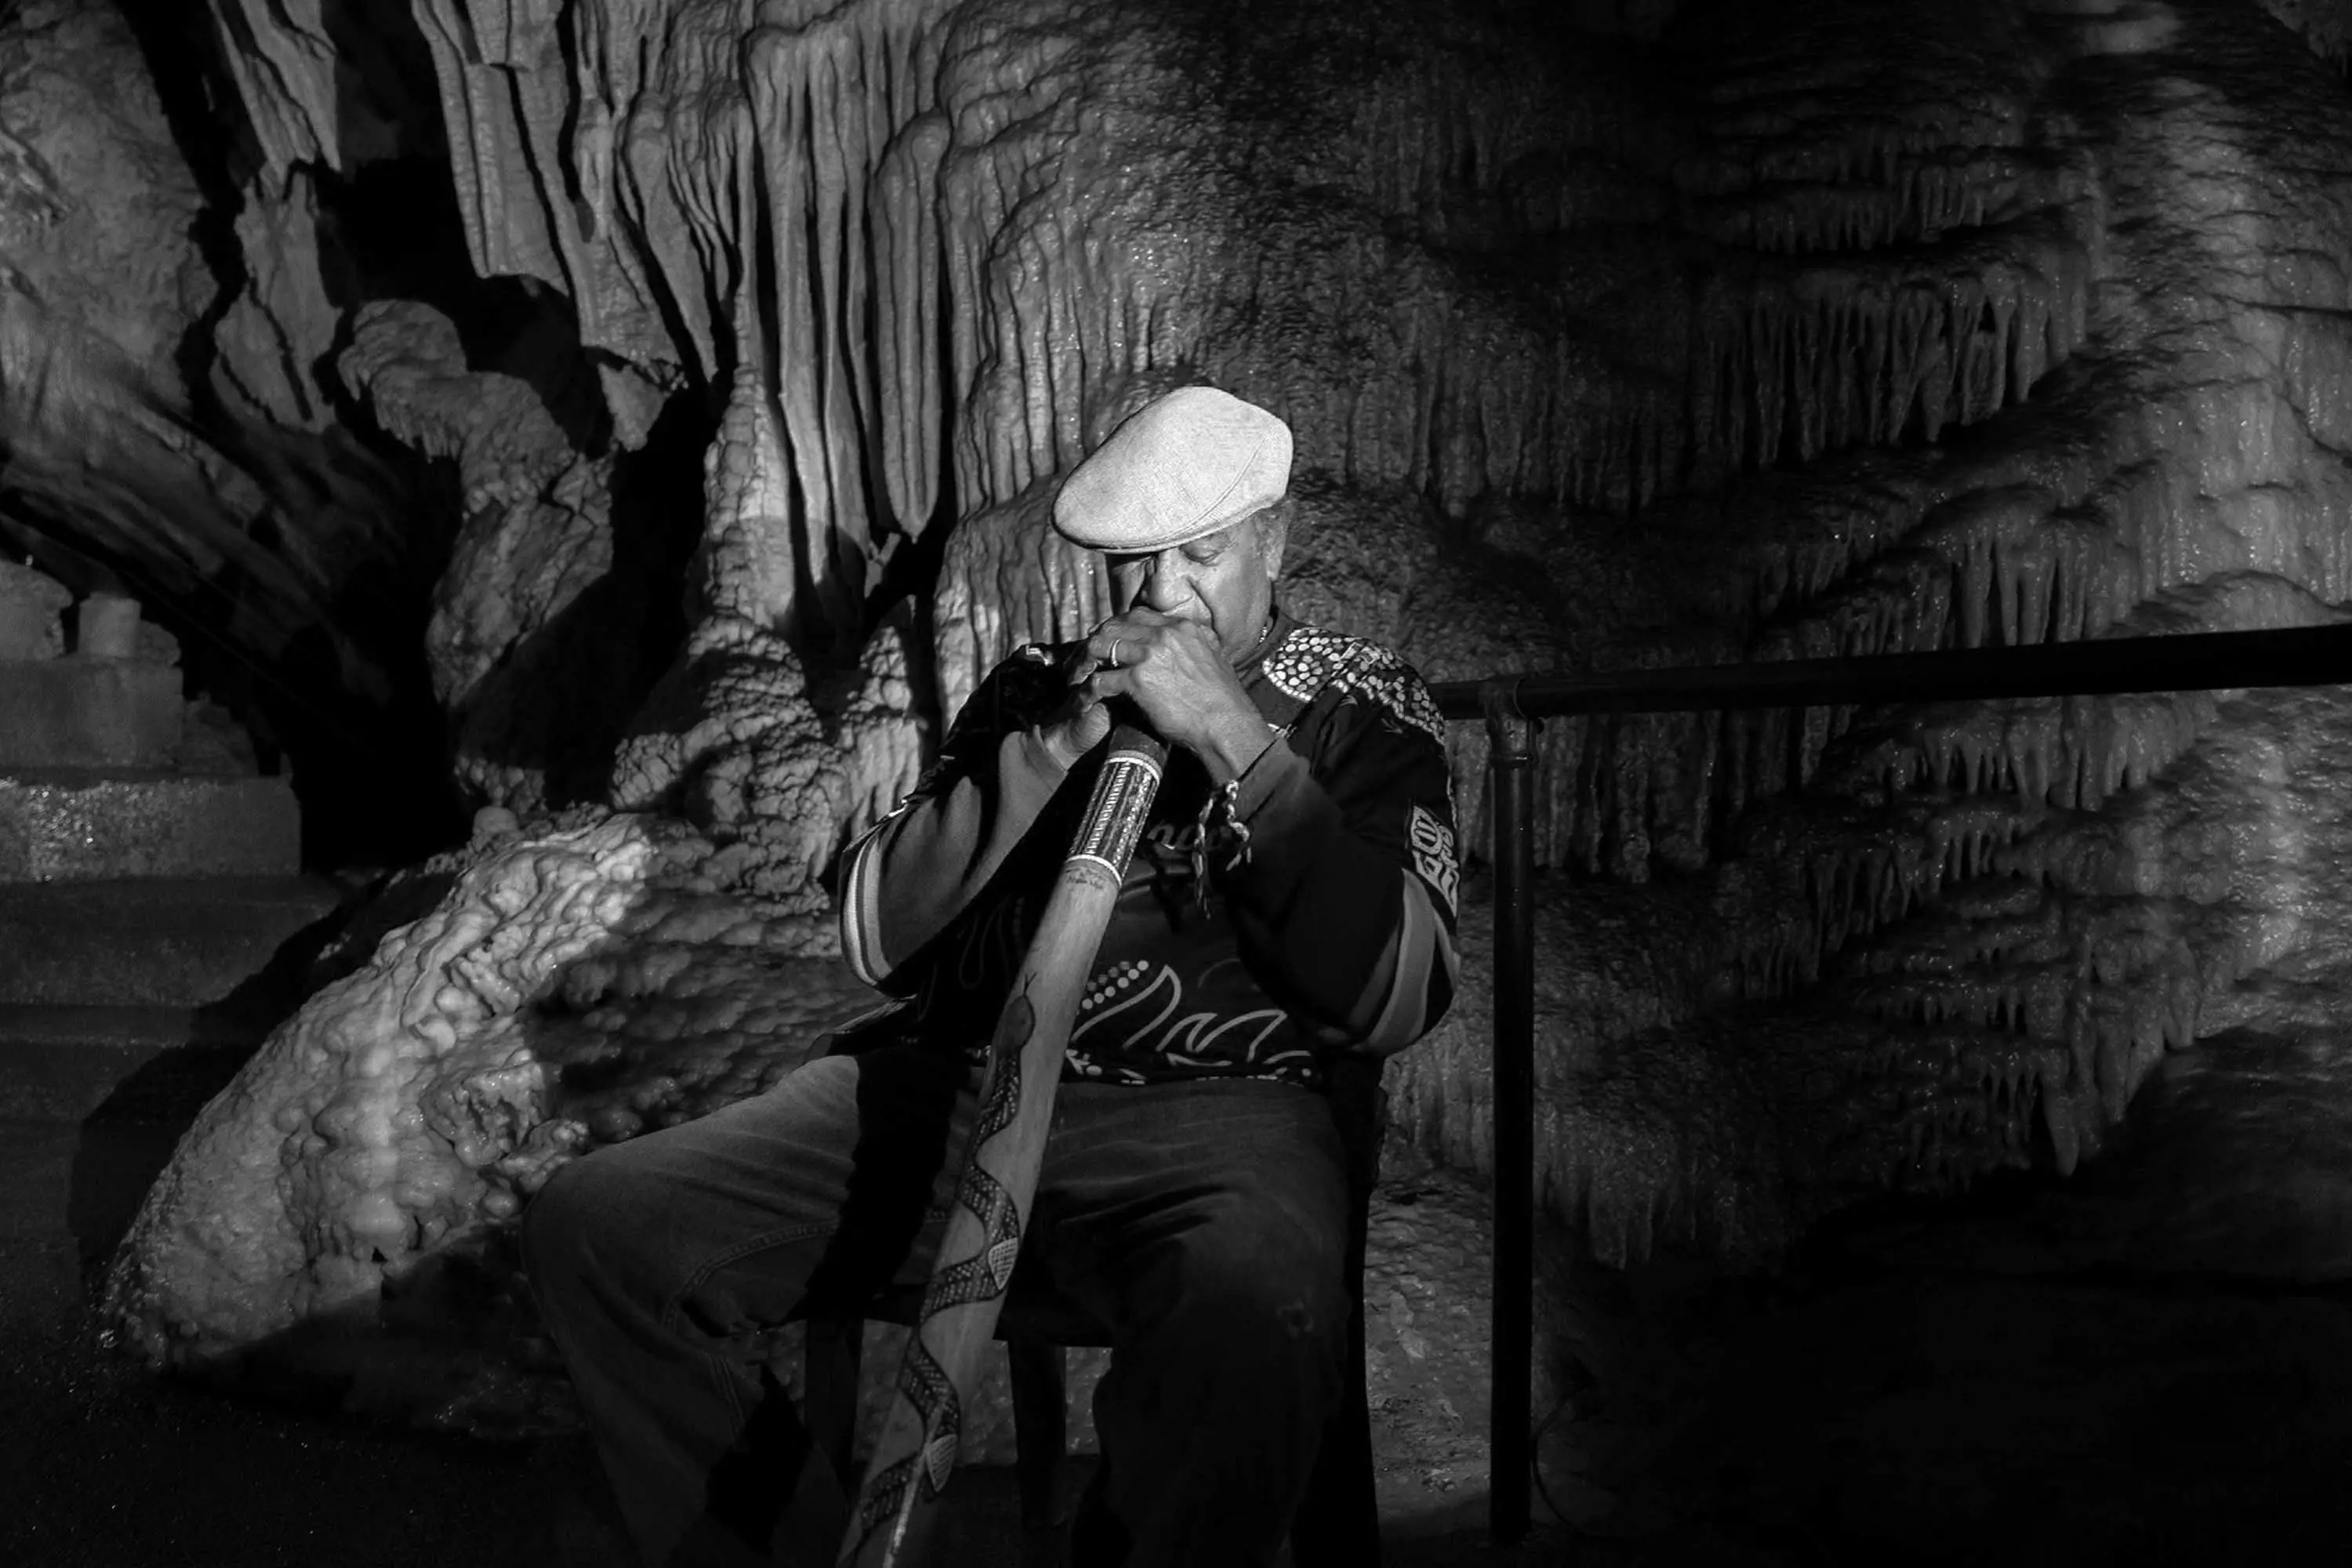 A man wearing a flat cap and a woolen jumper plays a wooden didgeridoo in limestone caves.